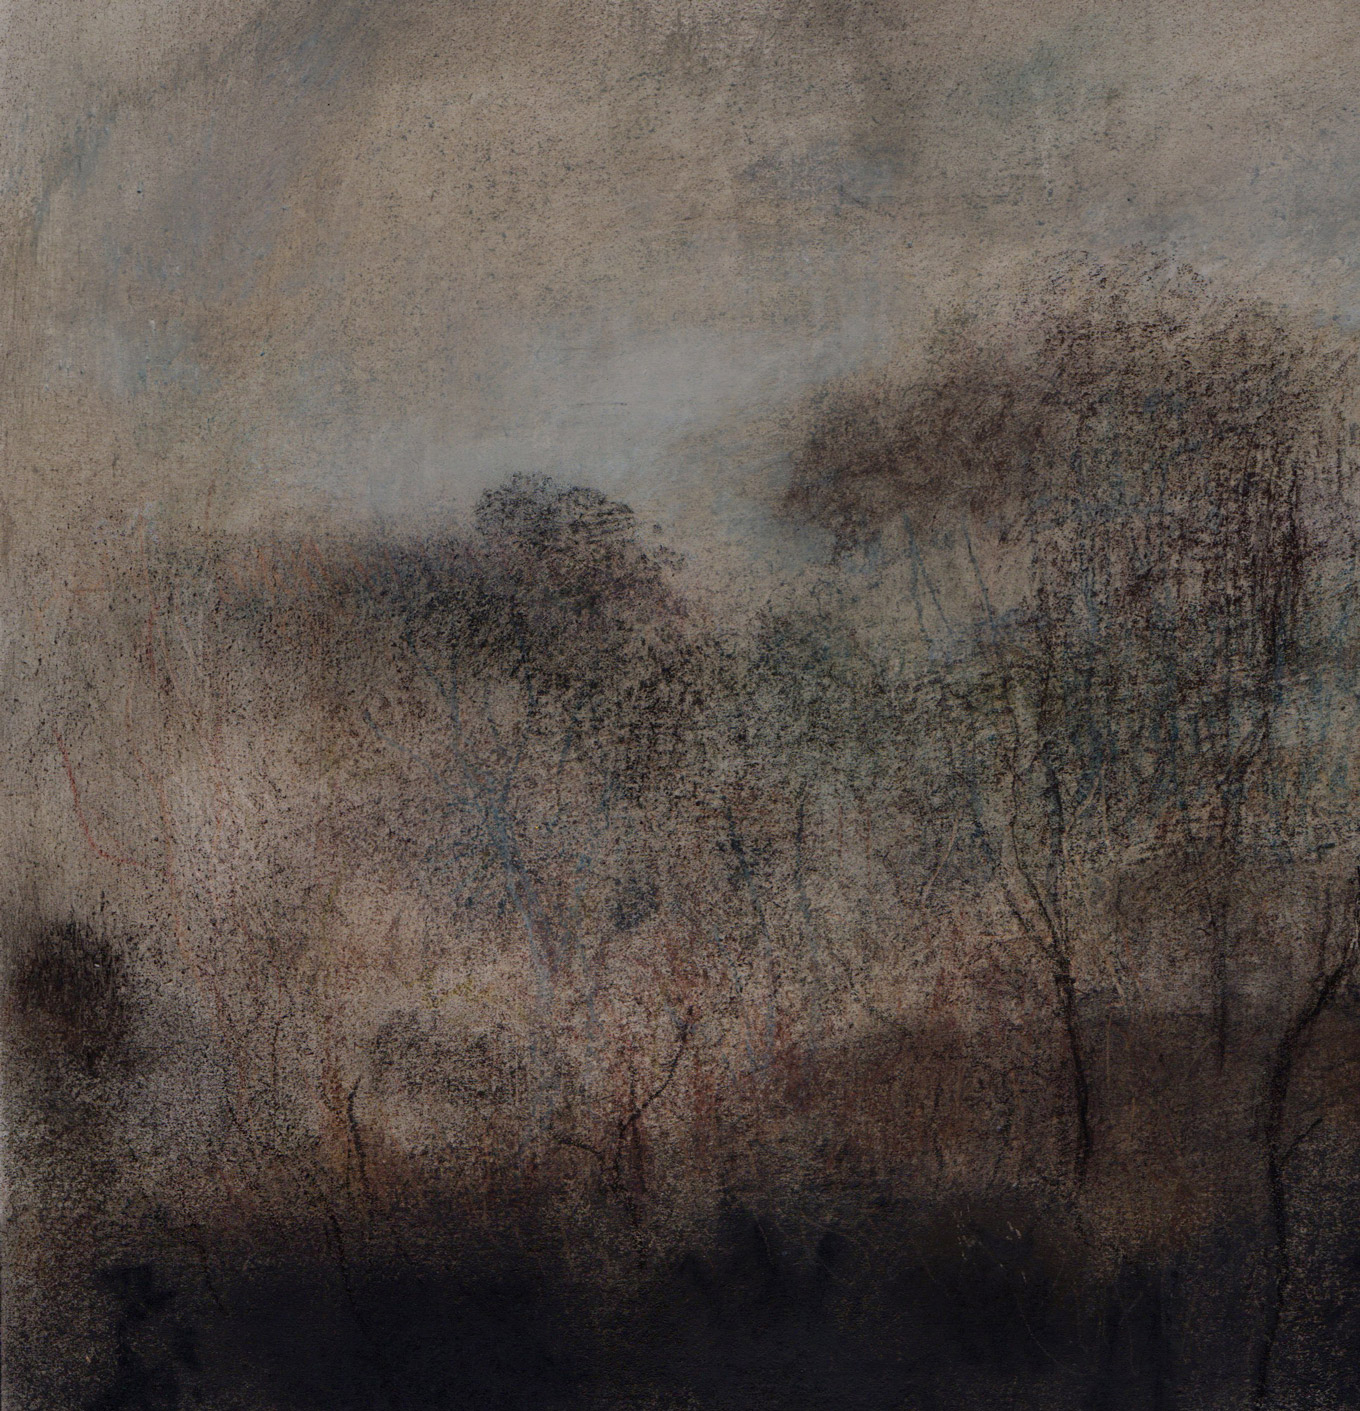 L1248 - Nicholas Herbert, British Artist, mixed media landscape painting of Chobham Common - Winter, mixed media on paper, 2020